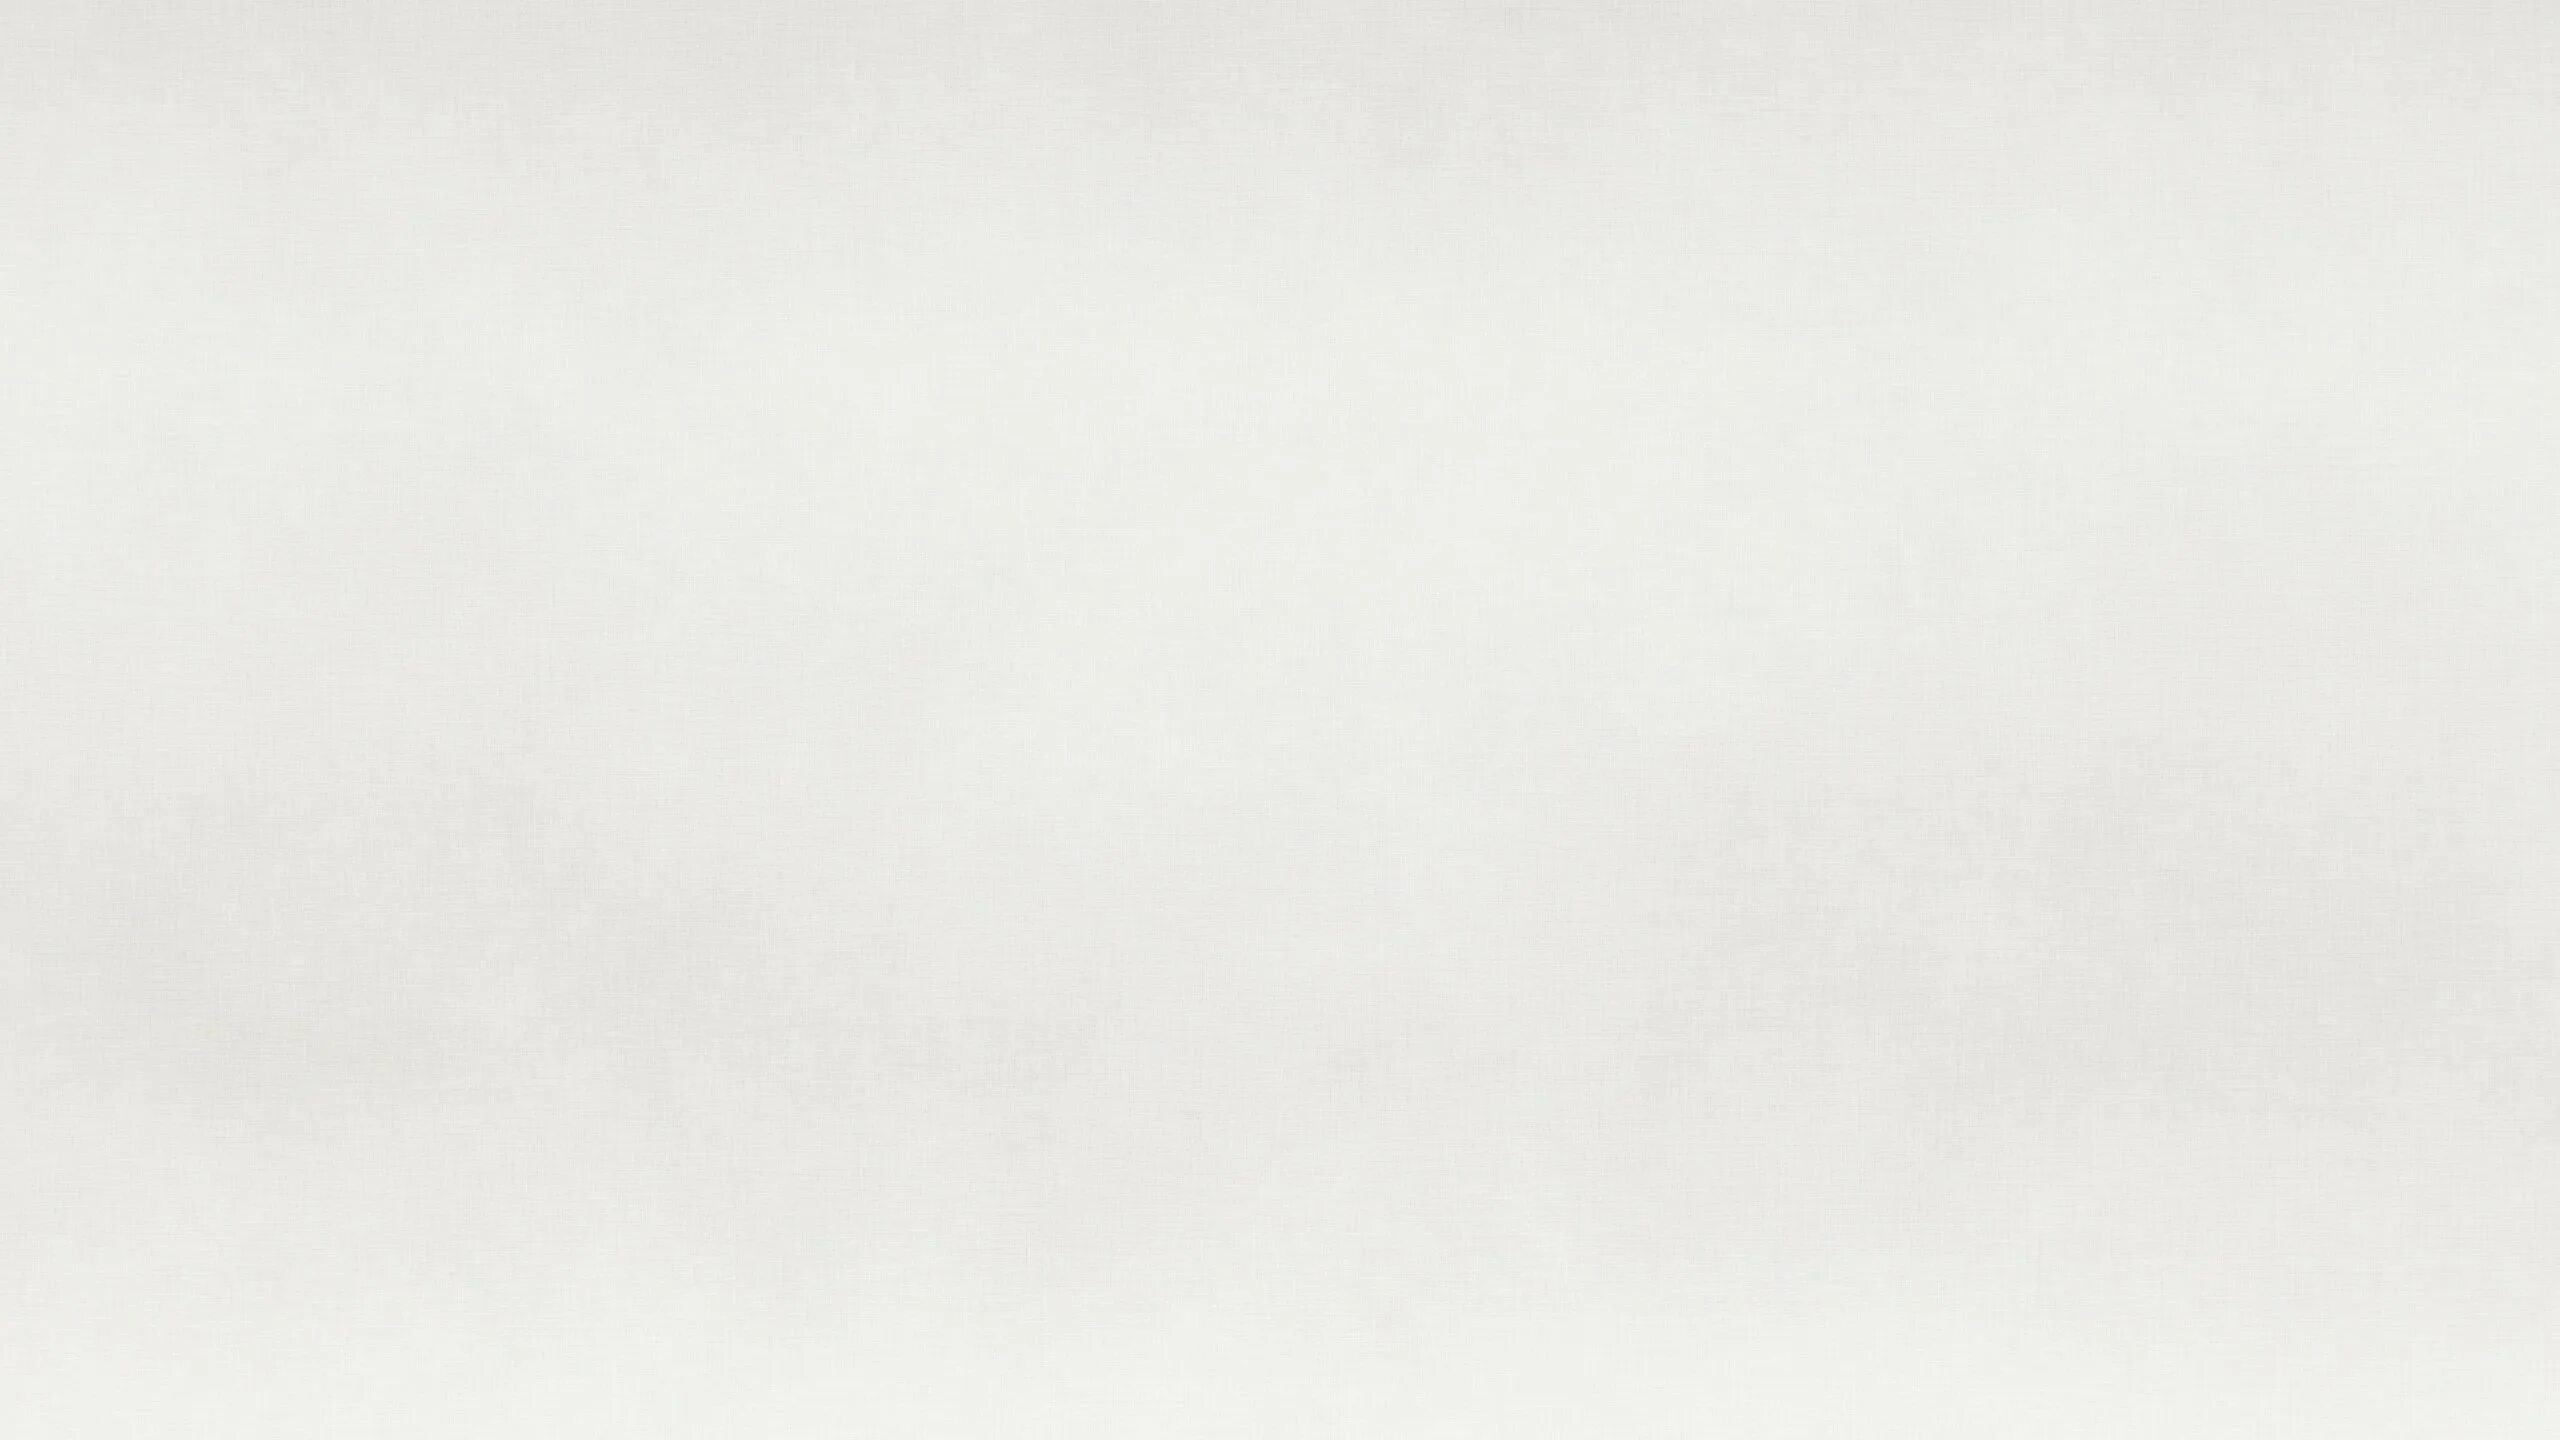 8 ce c. Lasselsberger Ceramics Копенгаген. Плитка настенная «Блю Шеврон» 25x45 см 1.46 м² цвет бежевый. Пункция верхнечелюстной пазухи алгоритм. Панасоник nn-st337m микроплата.